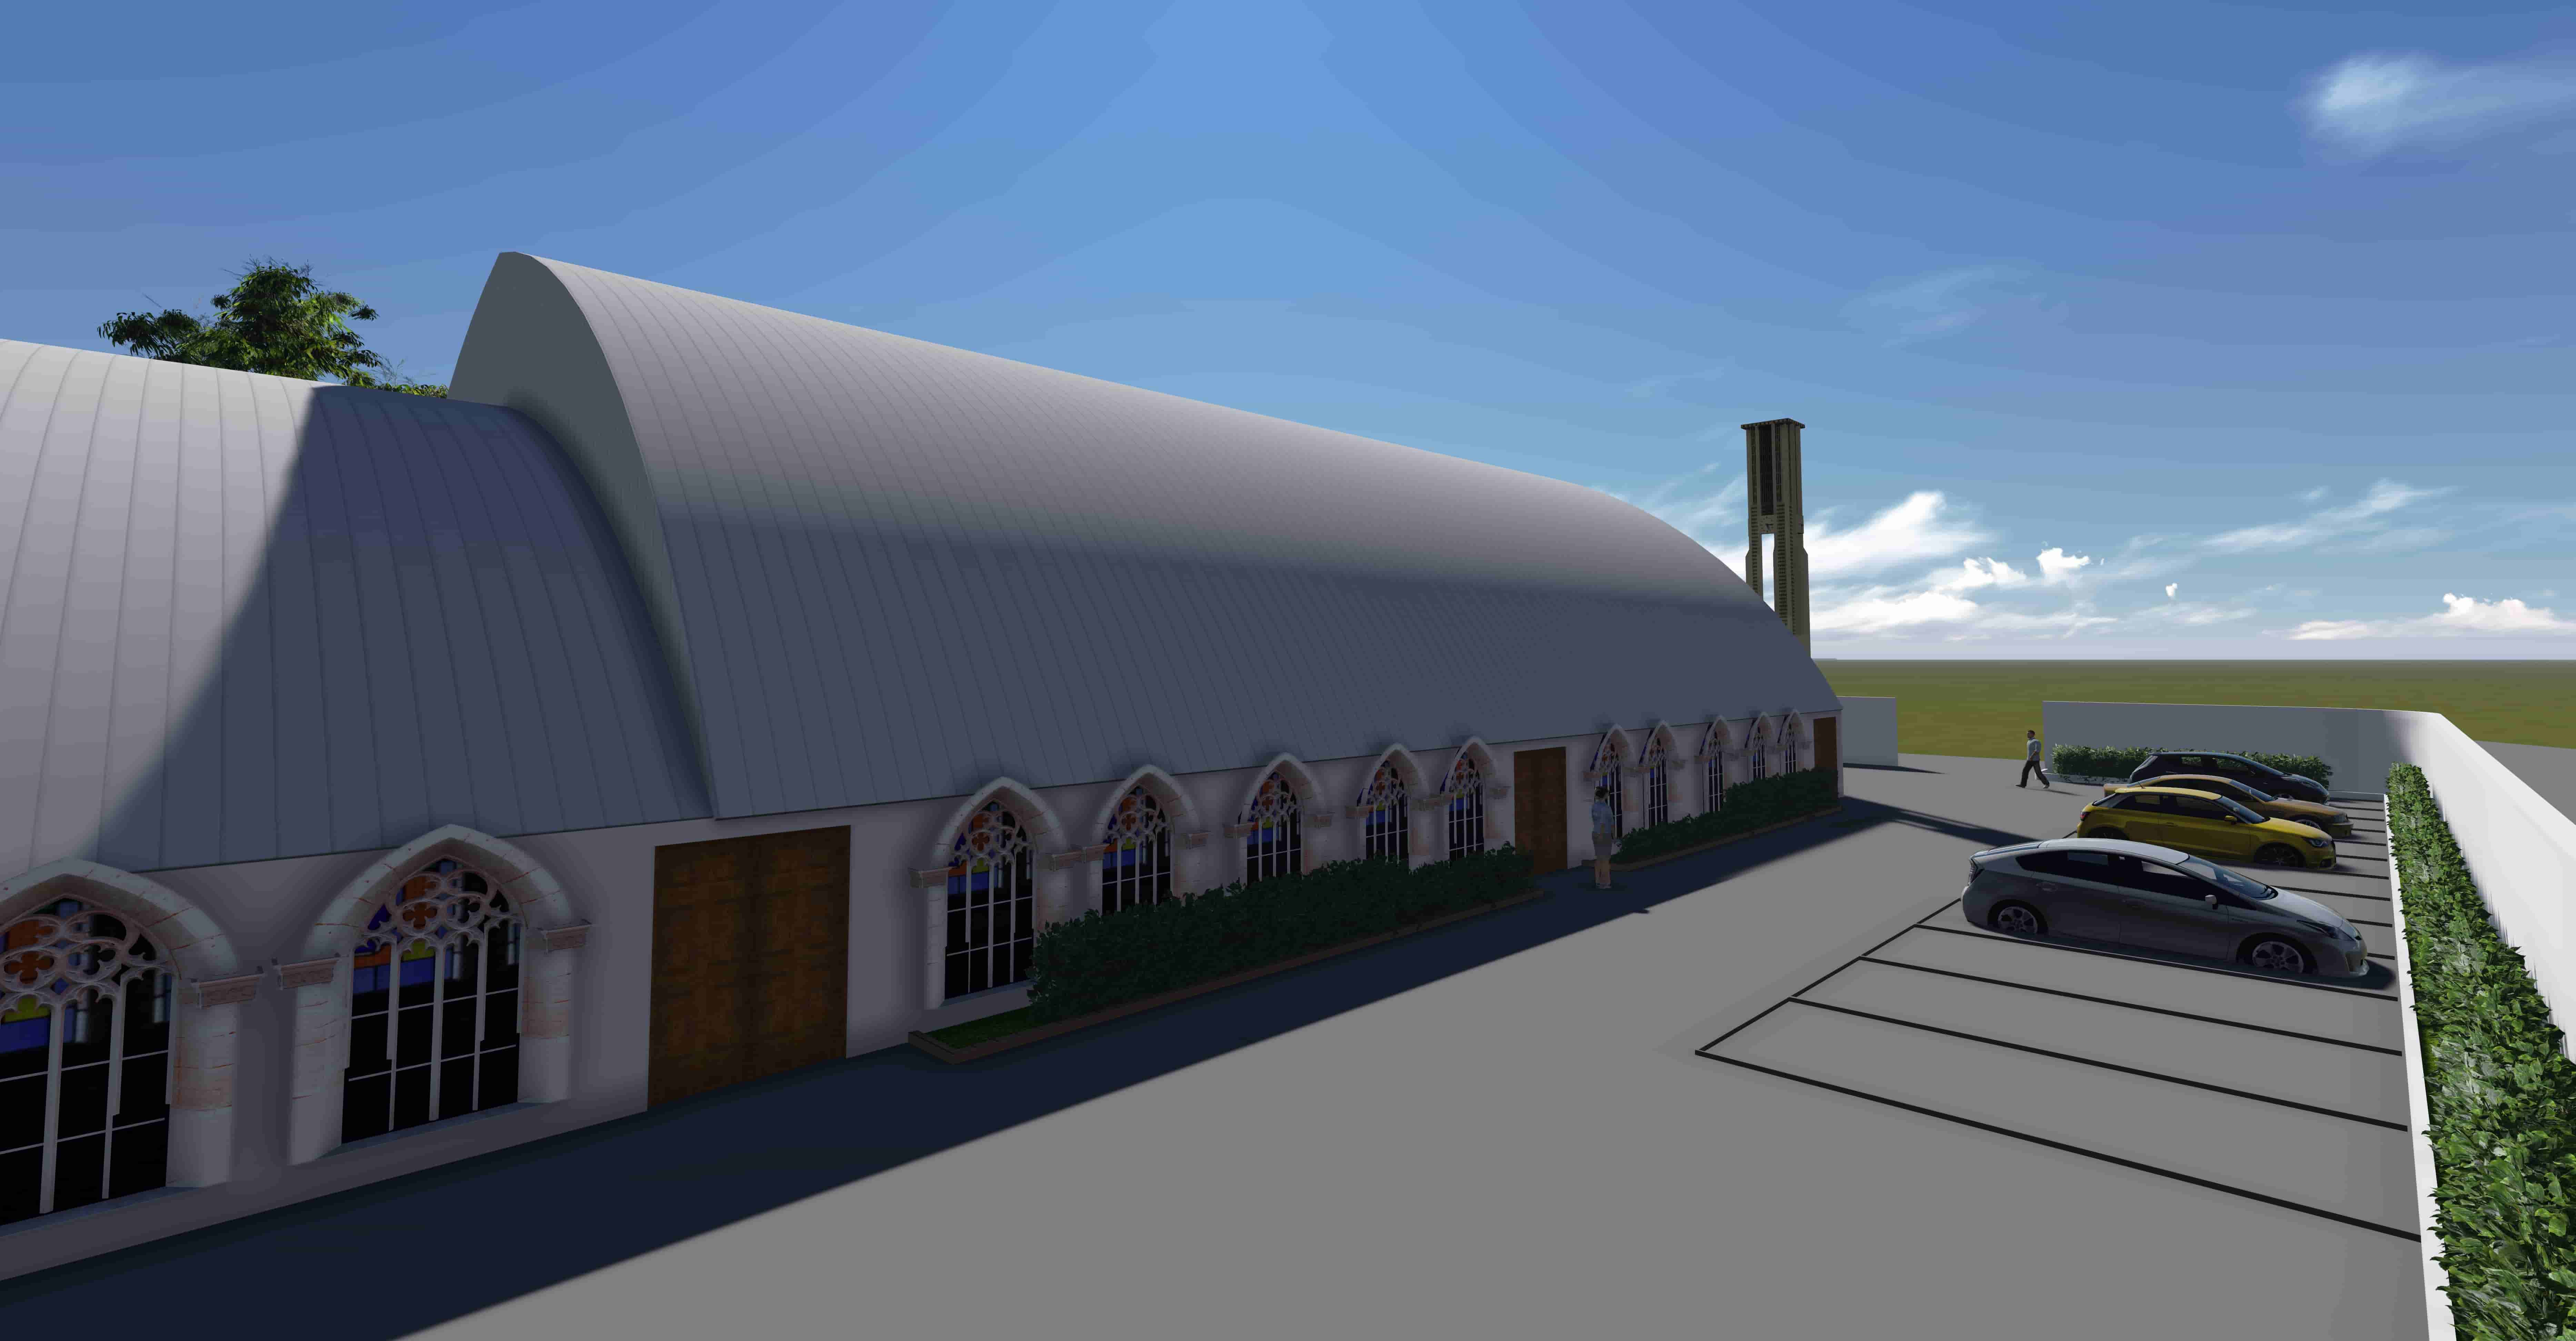 Proposed Church Design